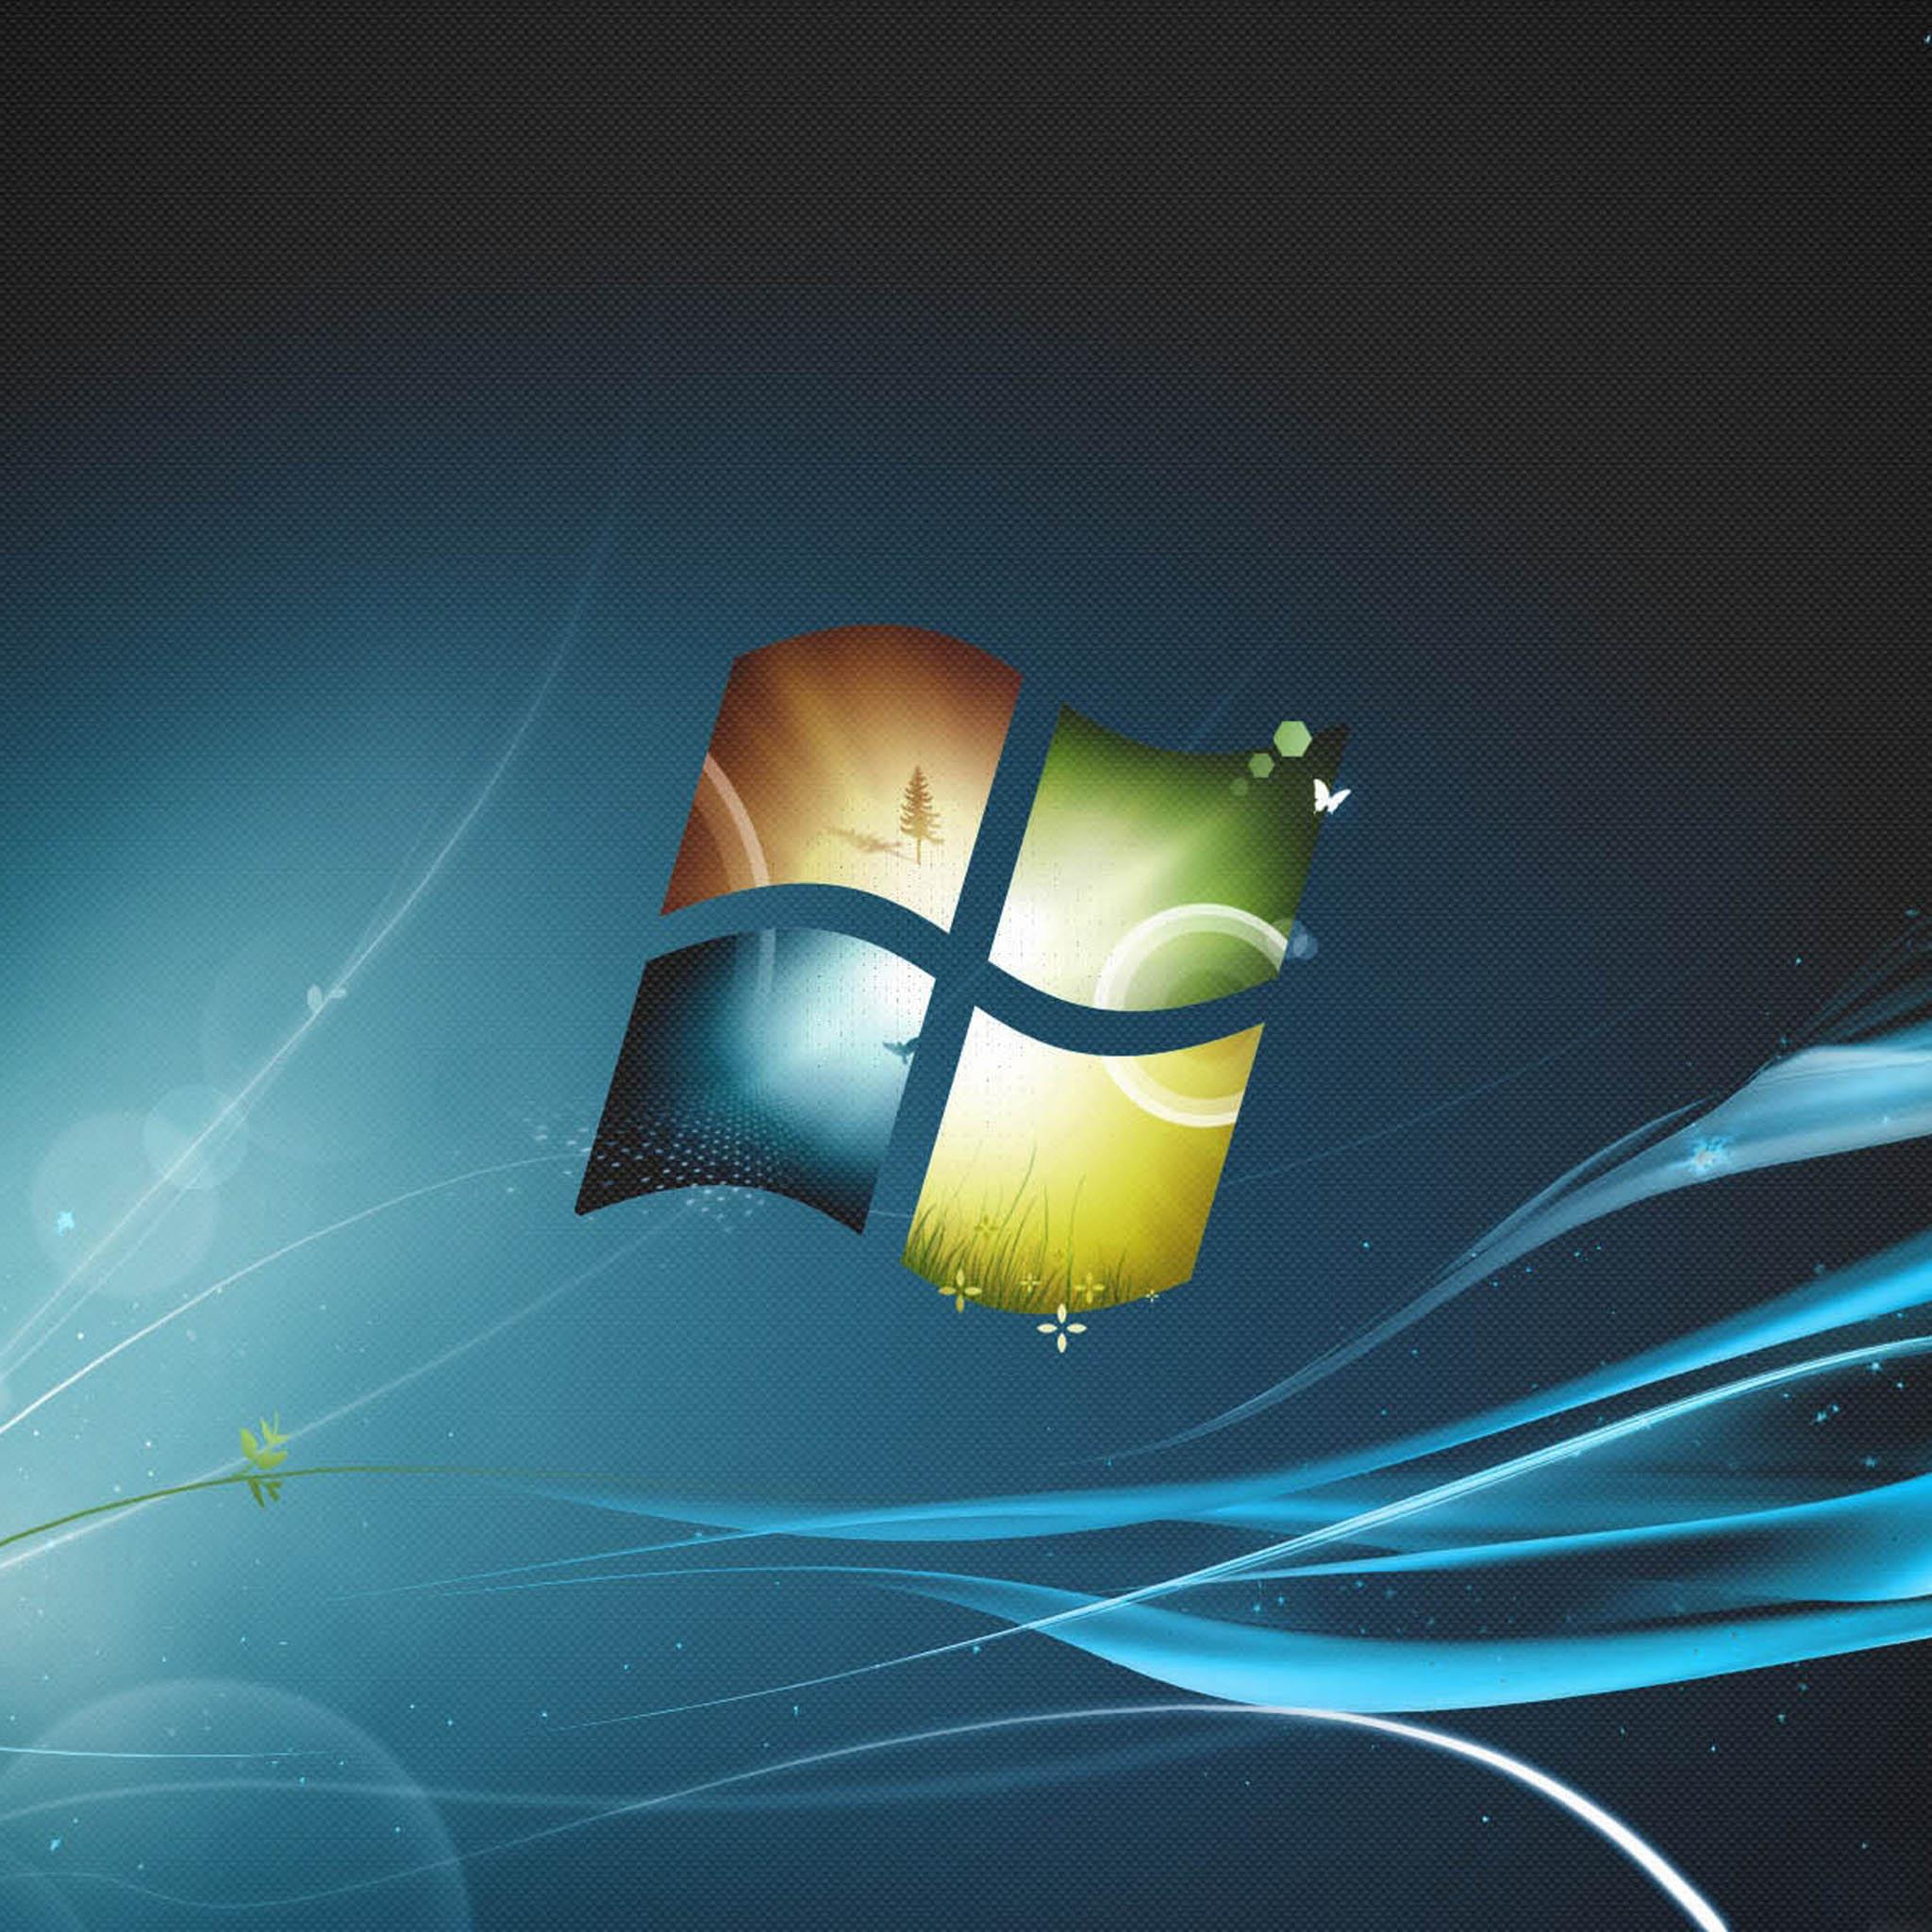 Windows 7 Touch Ipad Wallpaper Desktop Ipad タブレット壁紙ギャラリー